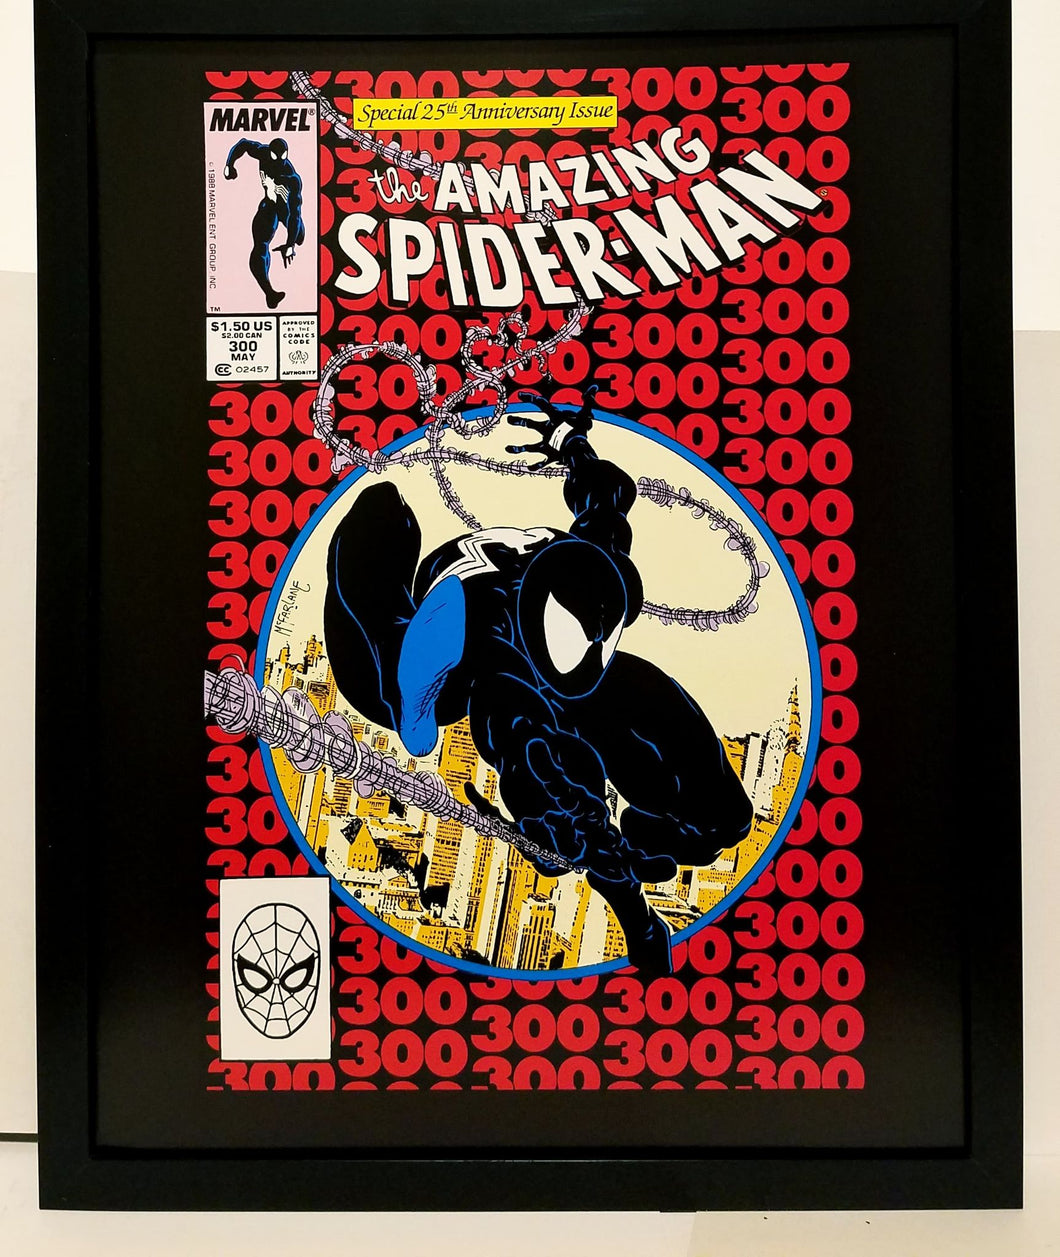 Amazing Spider-Man #300 by Todd McFarlane 11x14 FRAMED Marvel Comics Art Print Poster